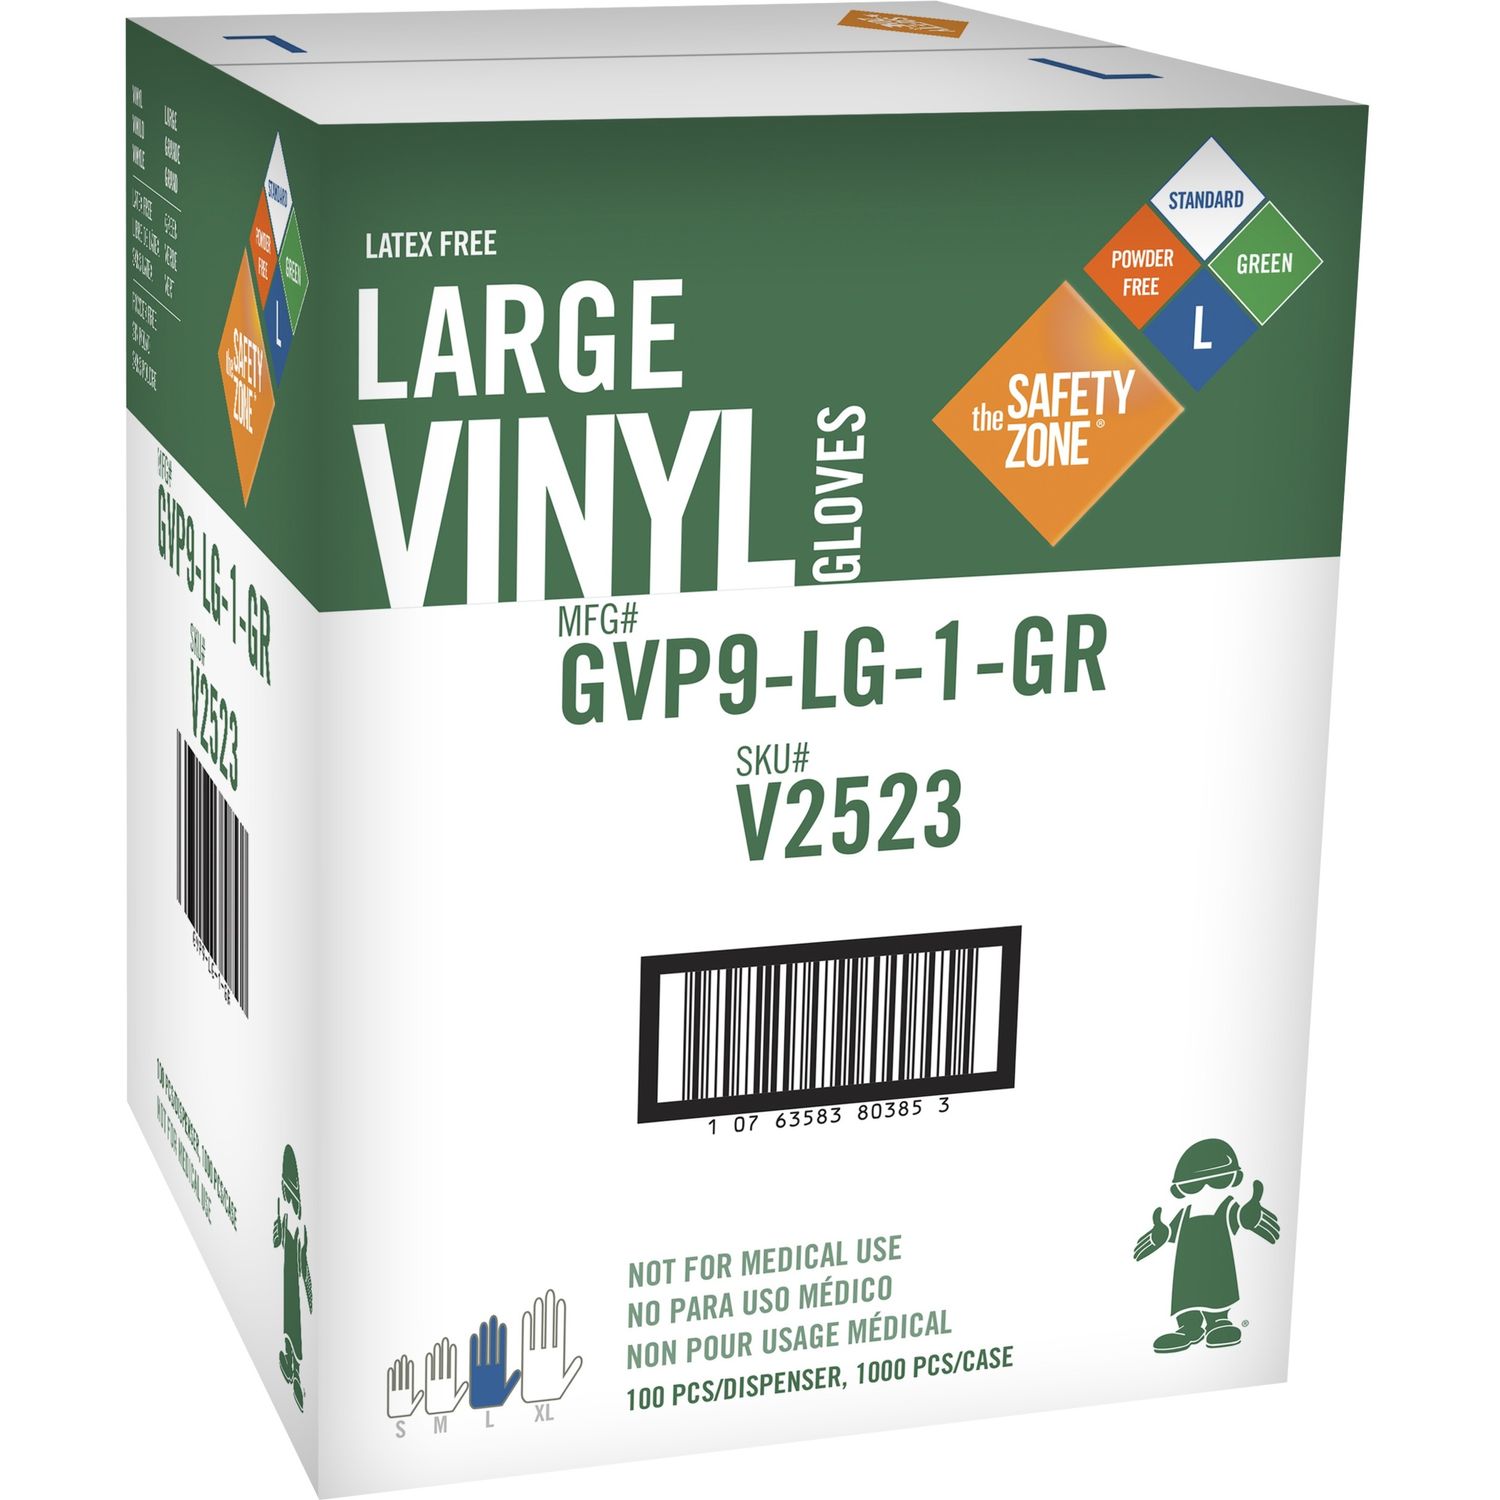 Powder Free Green Vinyl Gloves Large Size, Vinyl, Green, Powder-free, Latex-free, Comfortable, Silicone-free, Allergen-free, DINP-free, DEHP-free